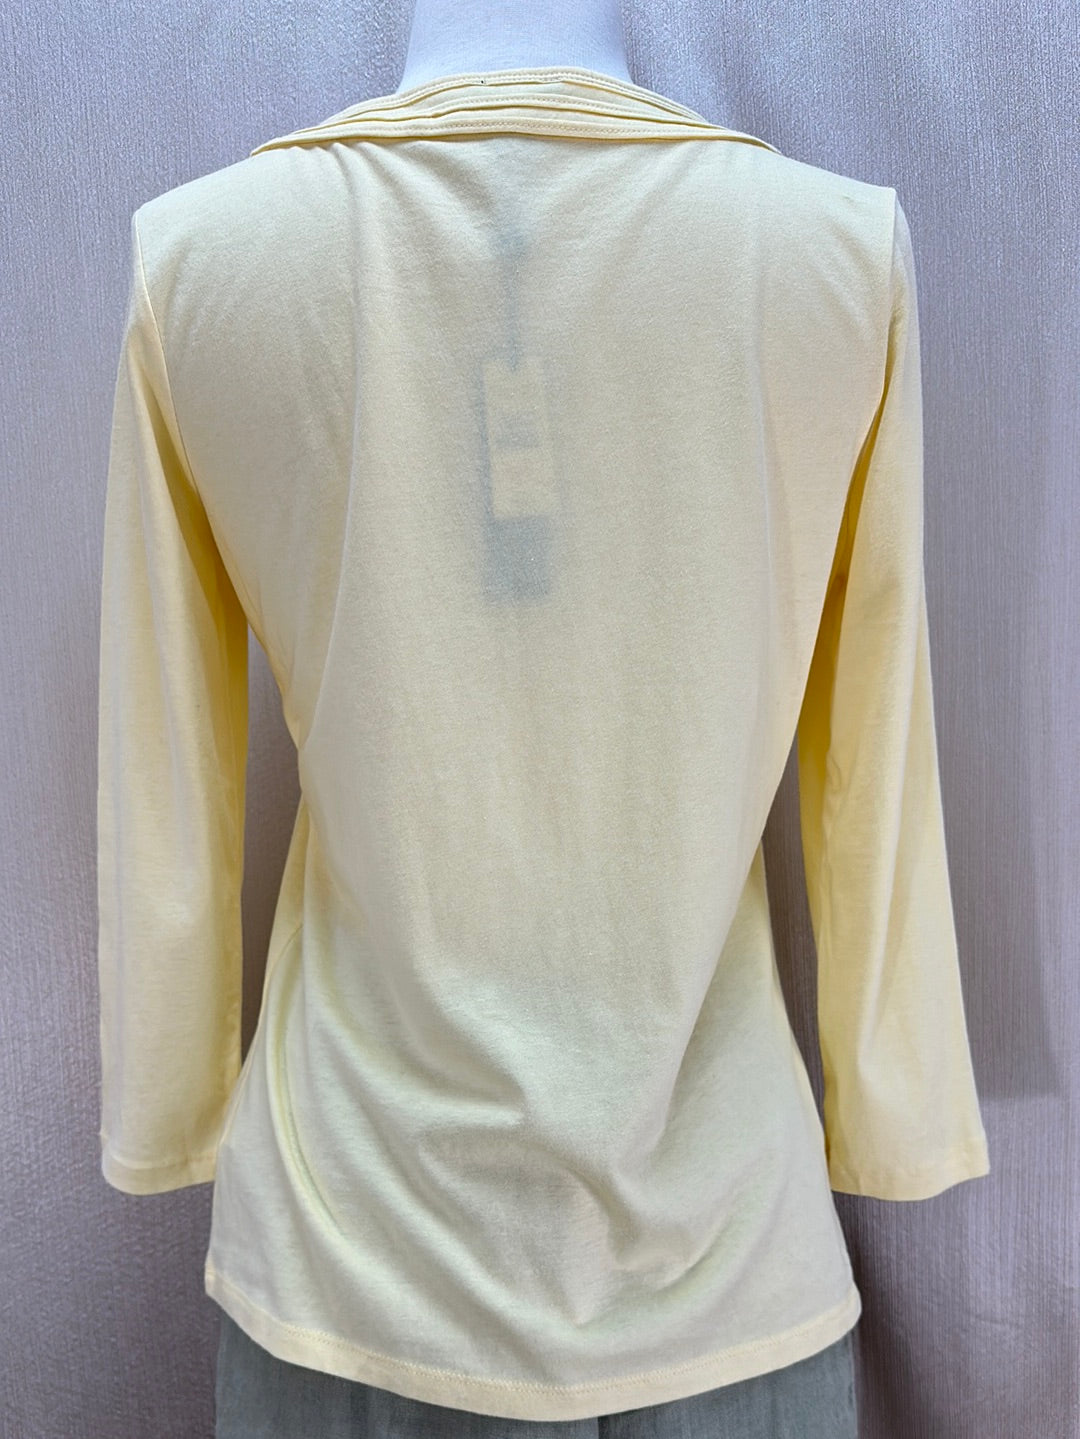 NWT - TALBOTS yellow Cotton Modal Blend 3/4 Sleeve Top - S